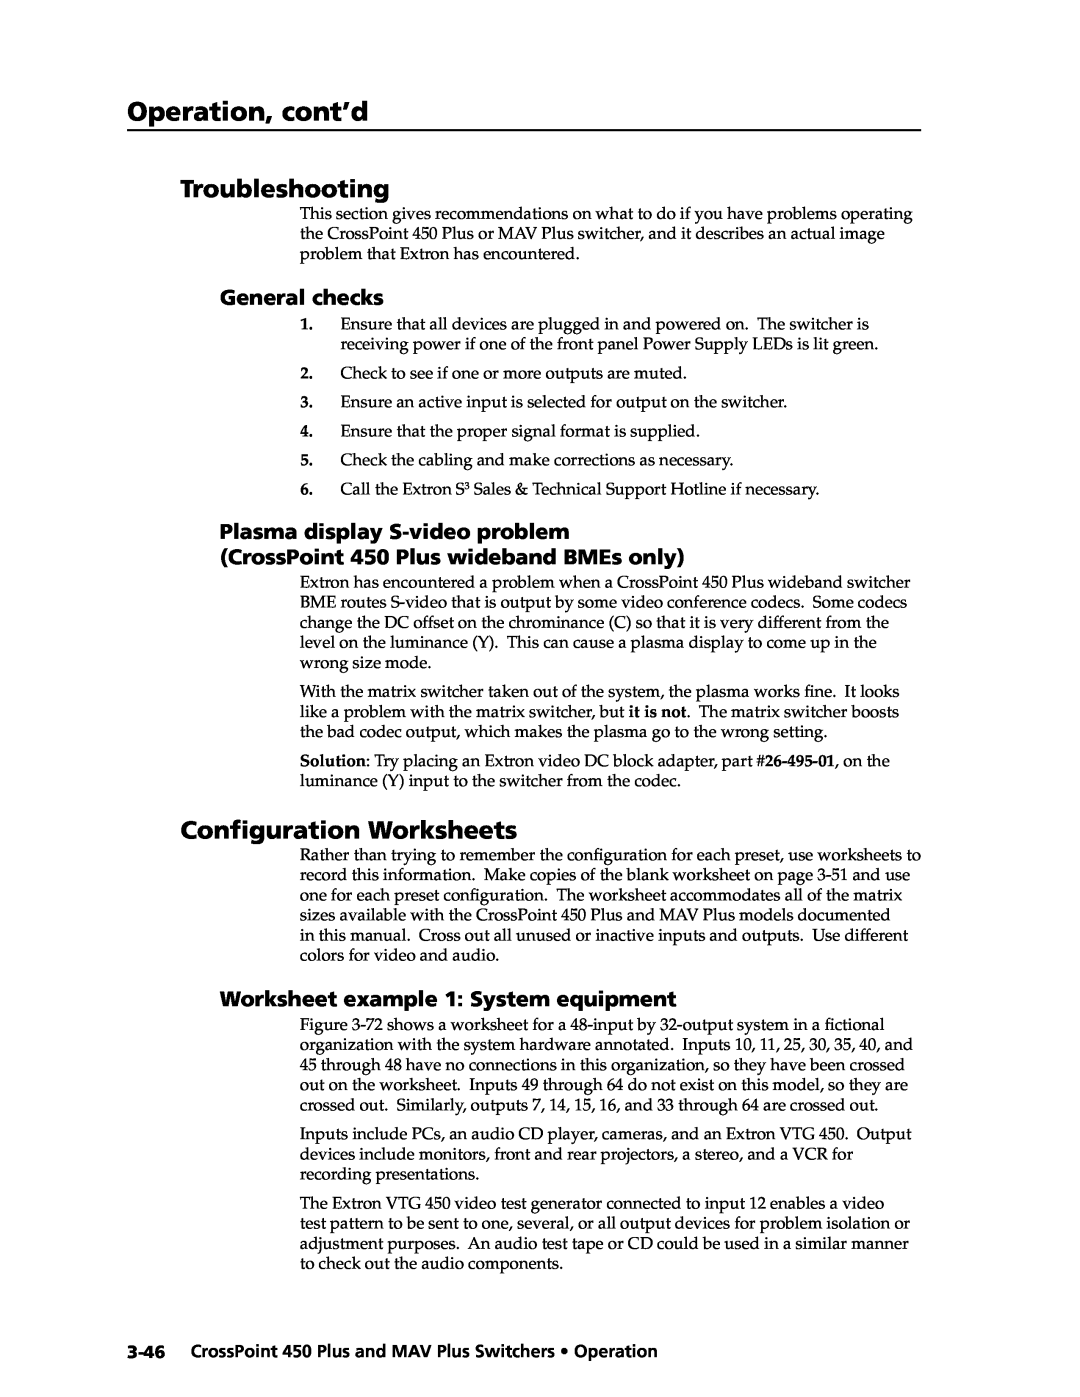 Extron electronic MAV Plus Troubleshooting, Conﬁguration Worksheets, General checks, Worksheet example 1 System equipment 